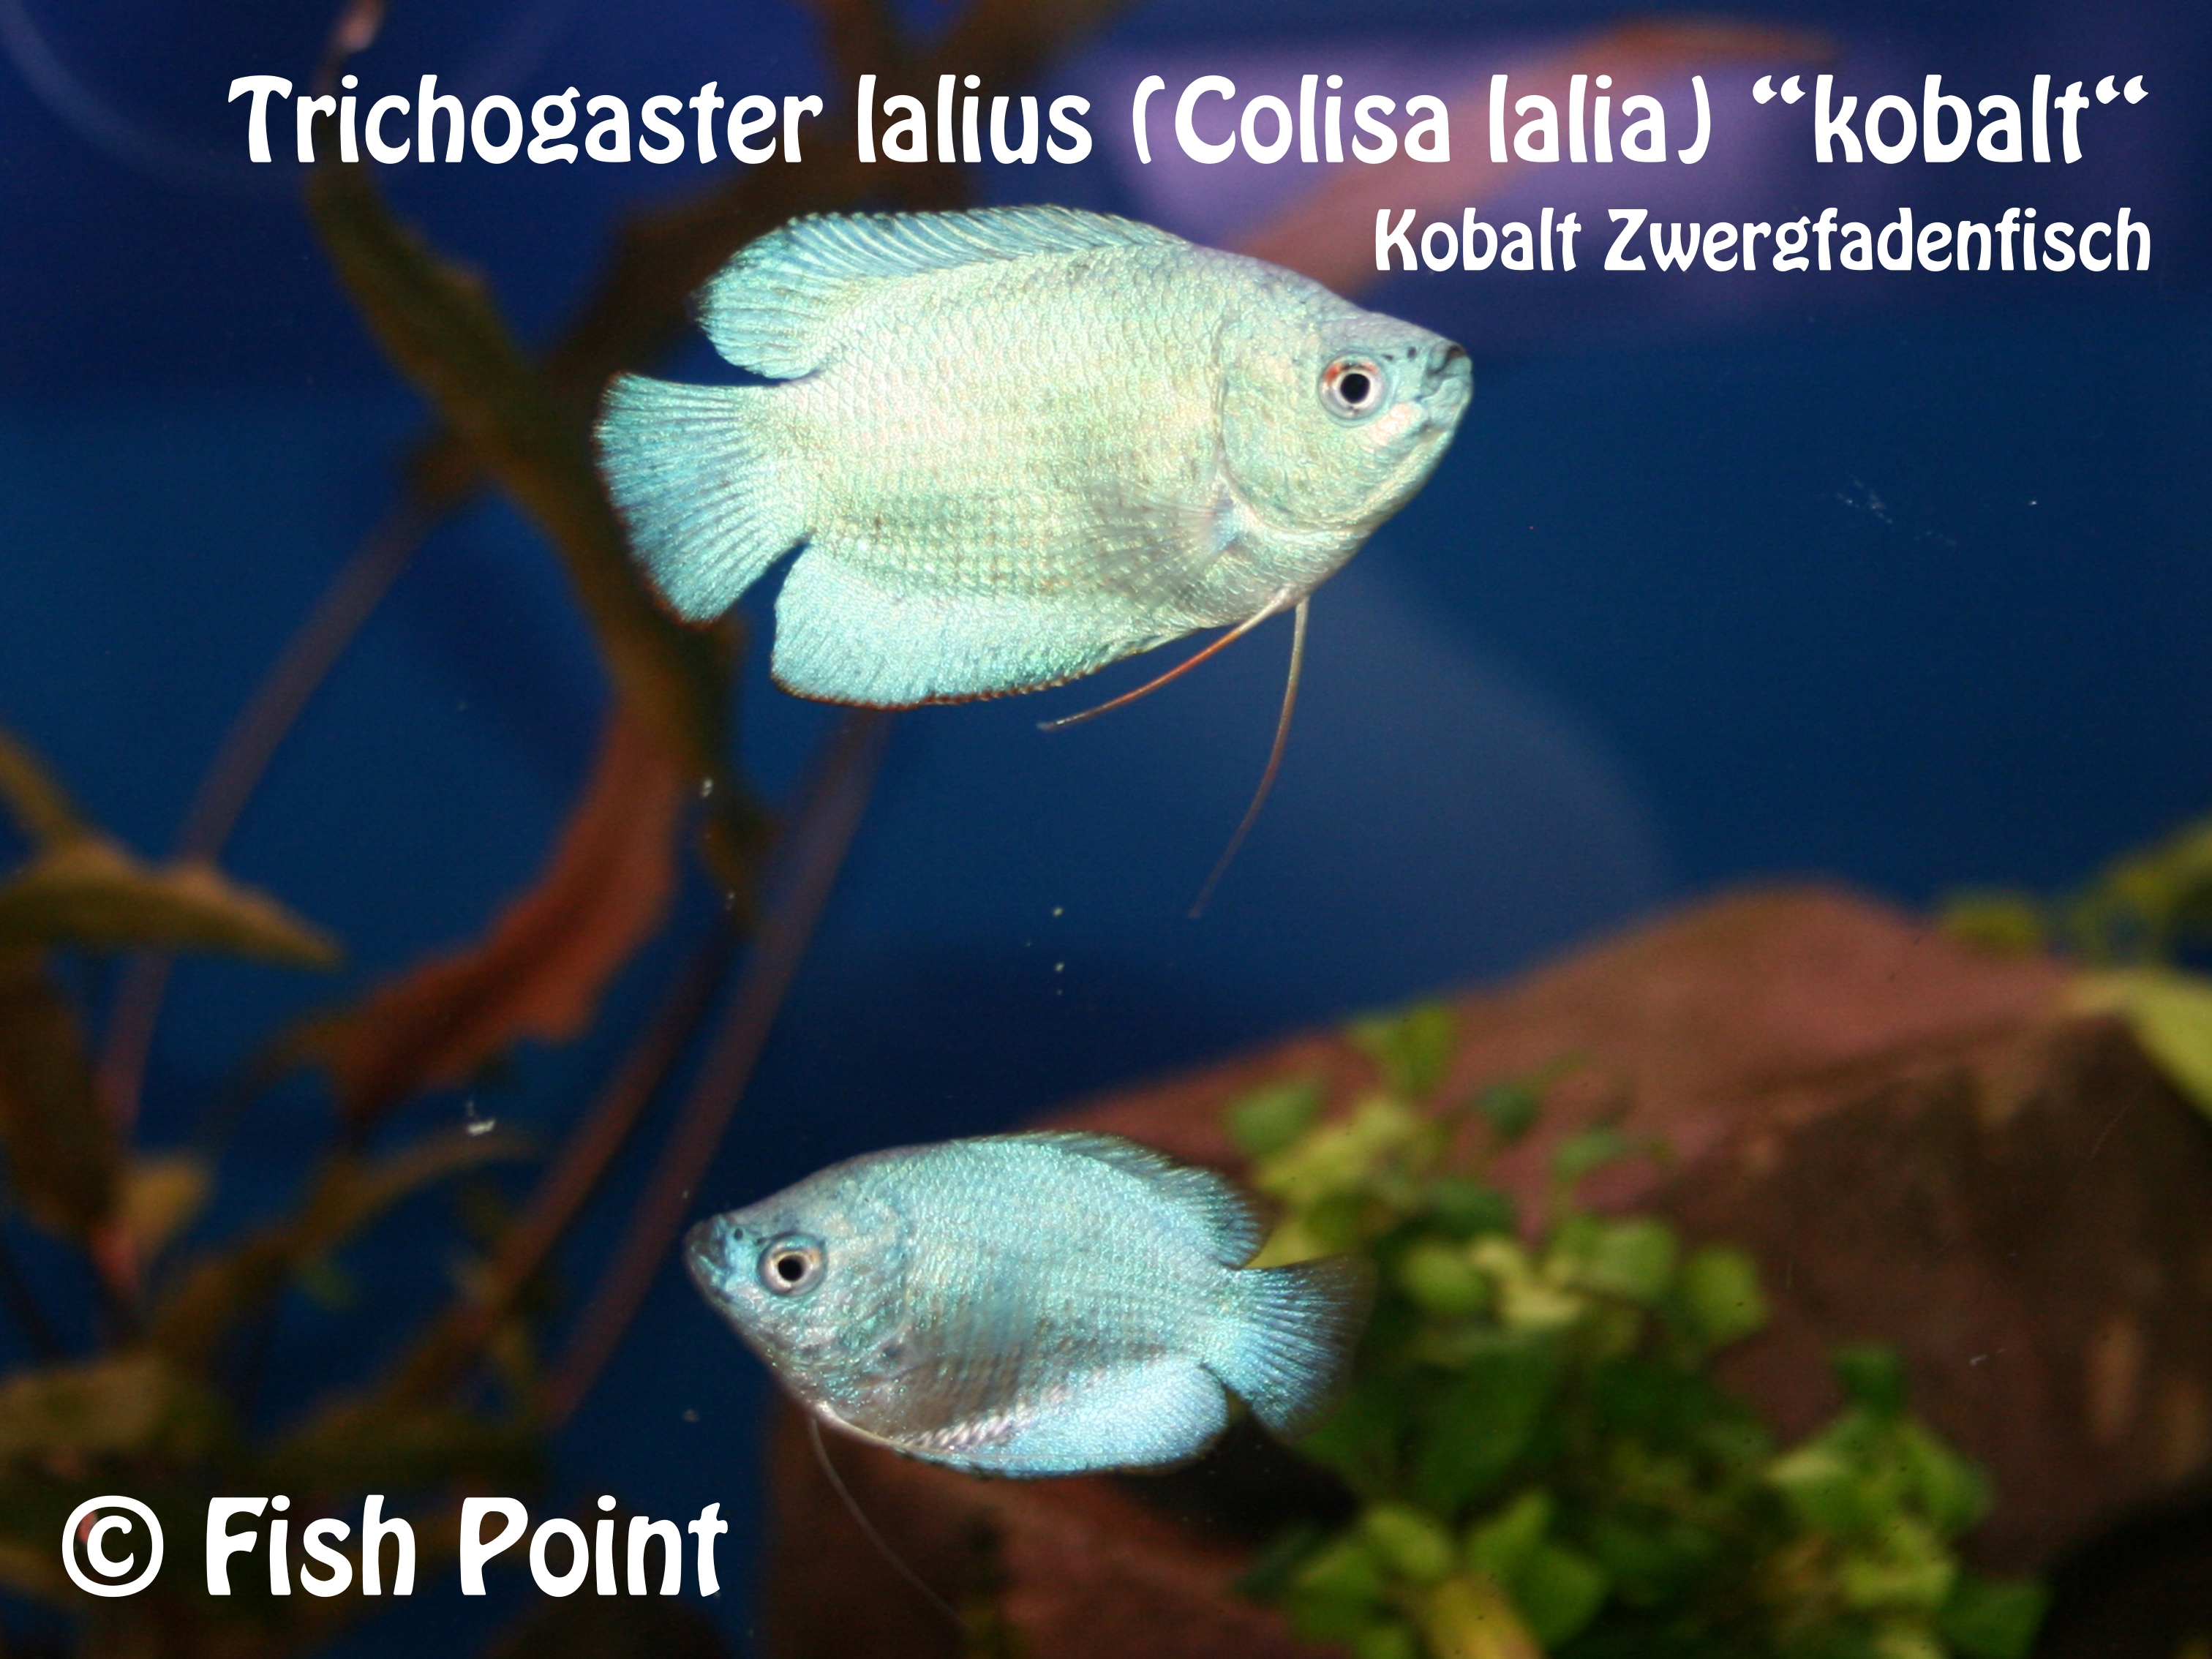 Kobalt Zwergfadenfisch